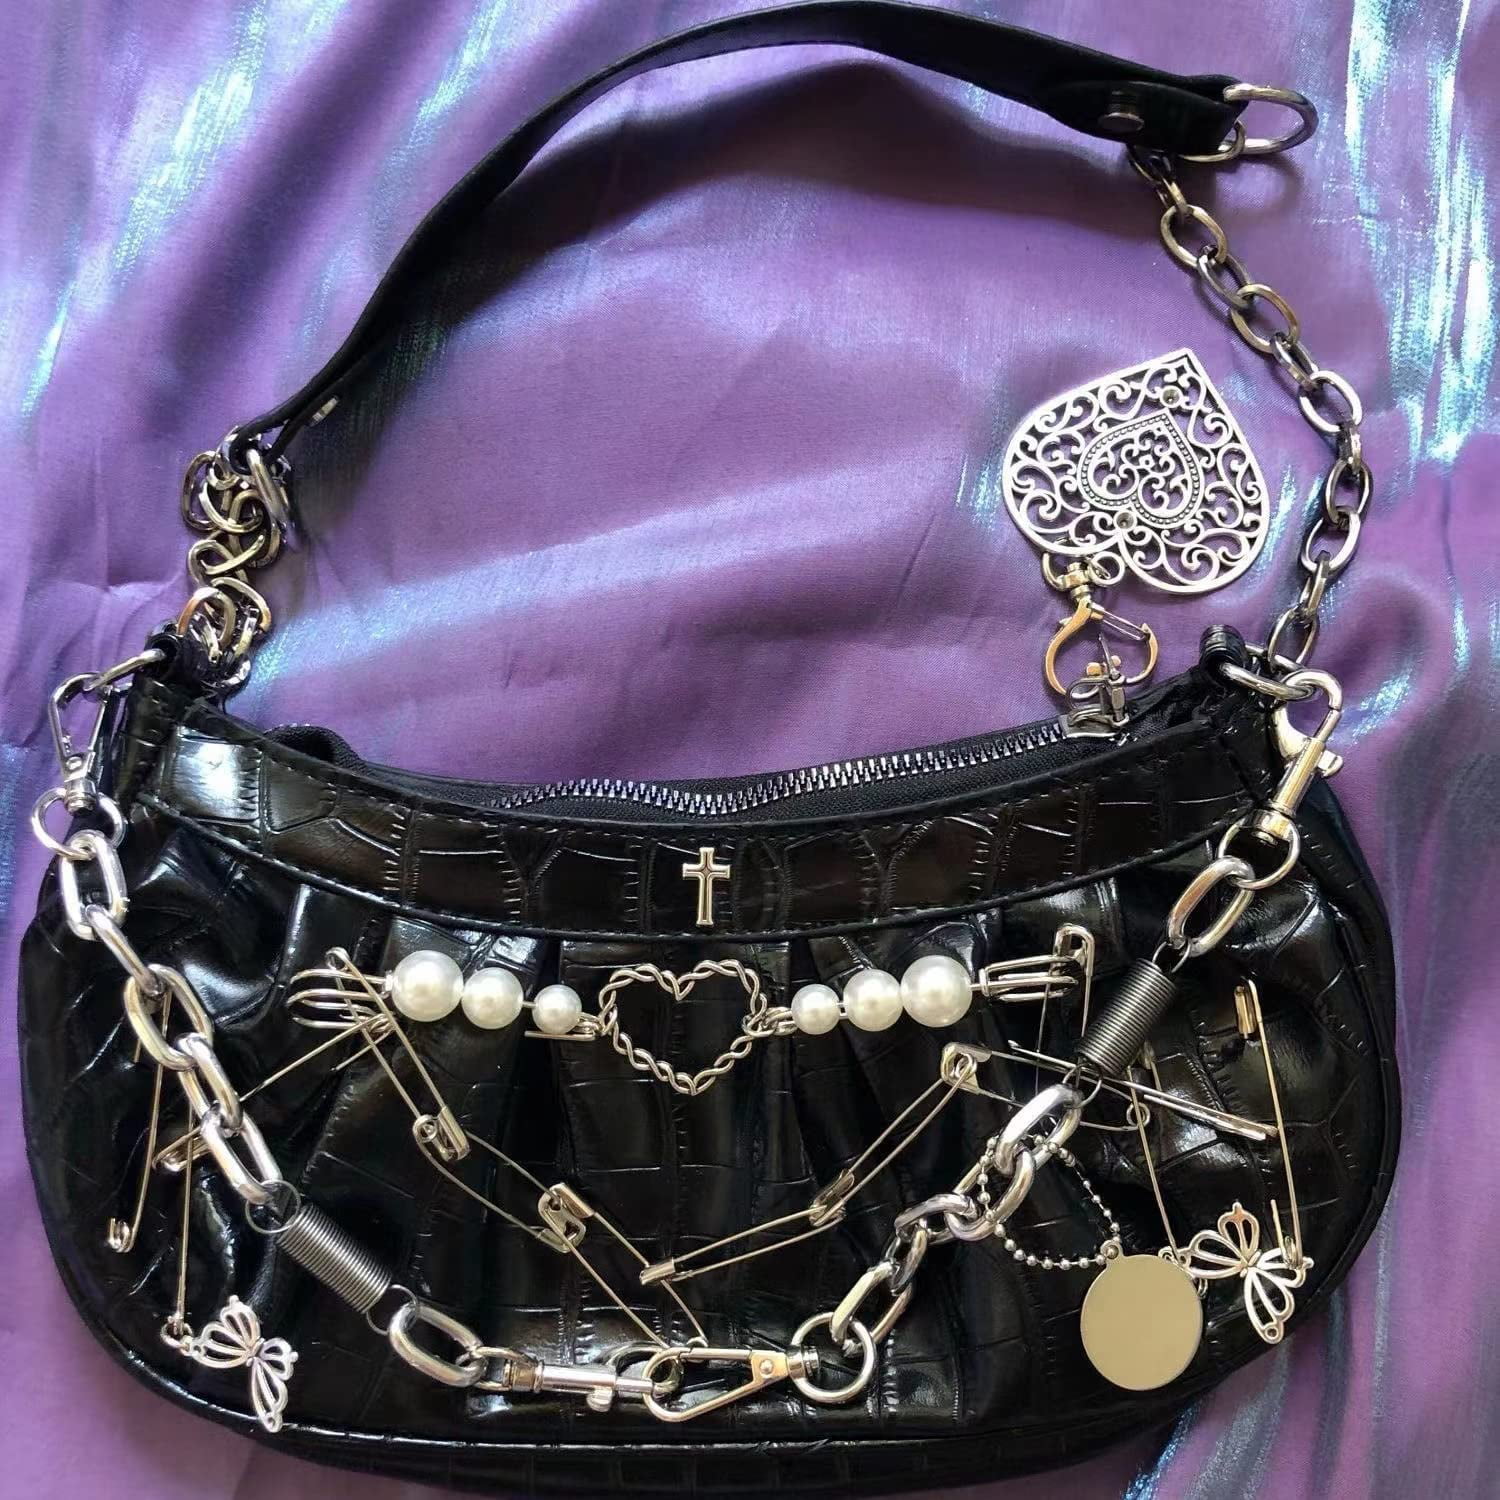 Danceemangoos Y2K Purses and Handbags Gothic Grunge Purse Retro Alt Emo Small Shoulder Bags Clutch Purse with Zipper 90s Fashion Egirl Edgy, Kids